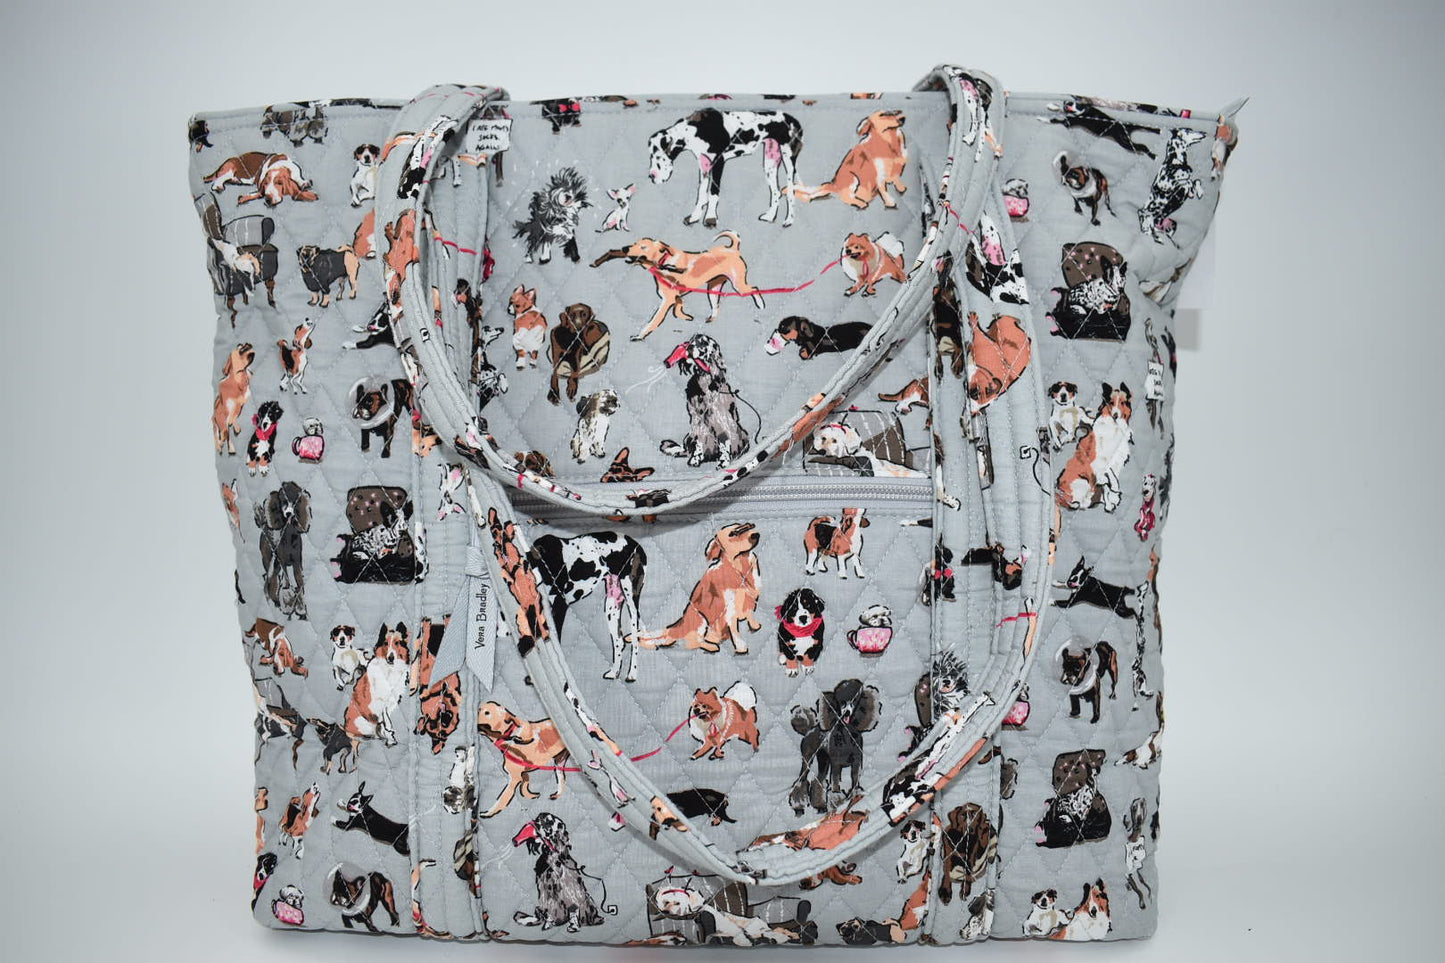 Vera Bradley Large Vera Tote Bag in "Dog Show" Pattern